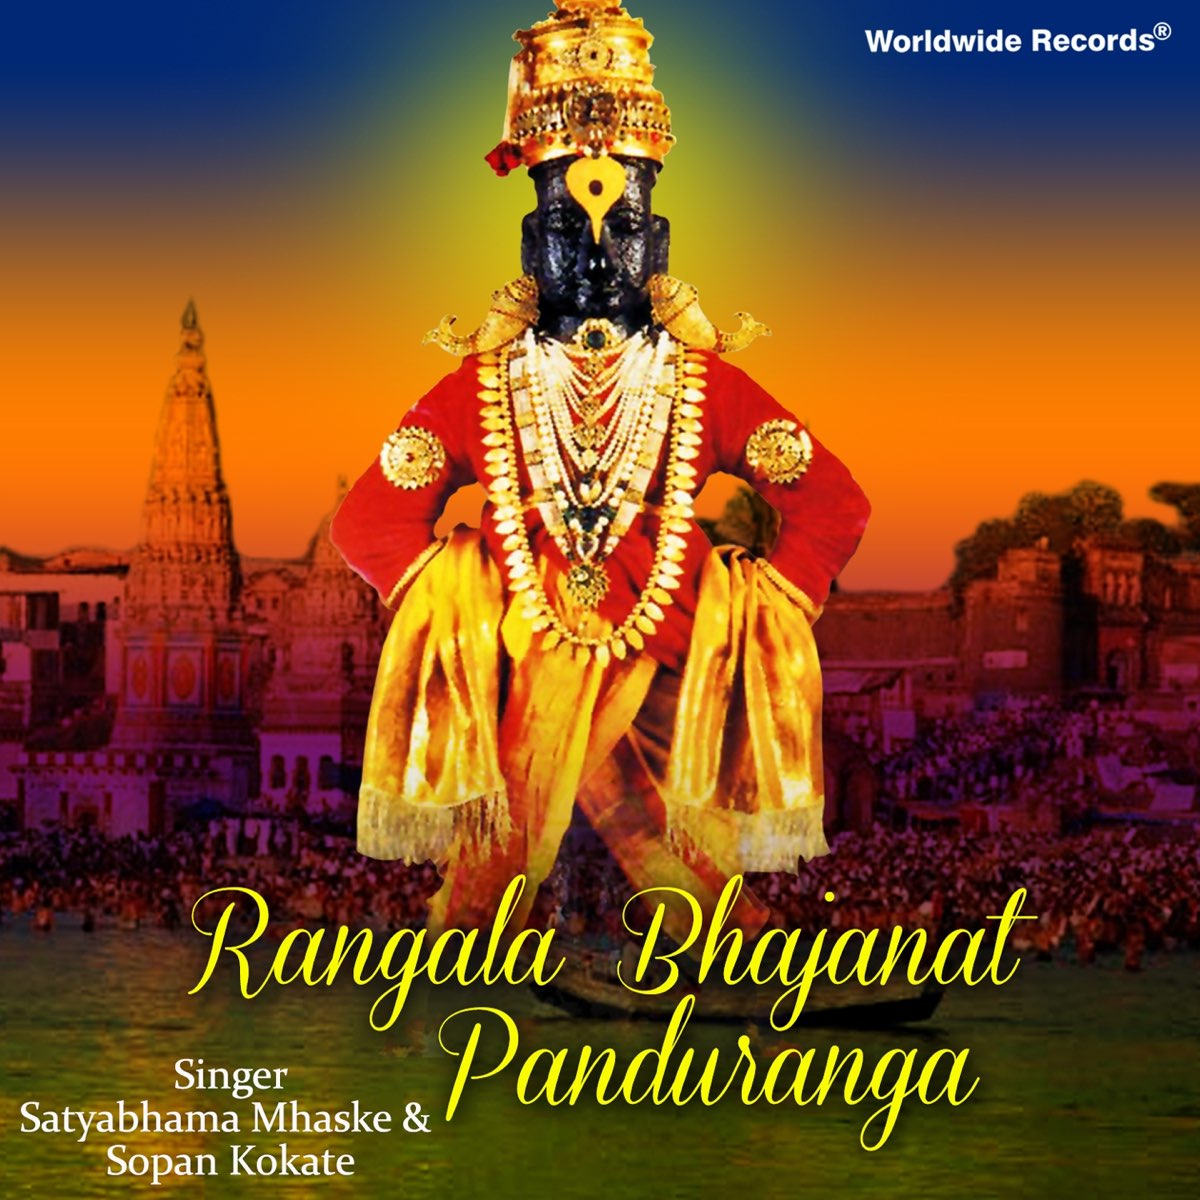 Rangala Bhajanat Panduranga by Satyabhama Mhaske & Sopan Kokate on ...